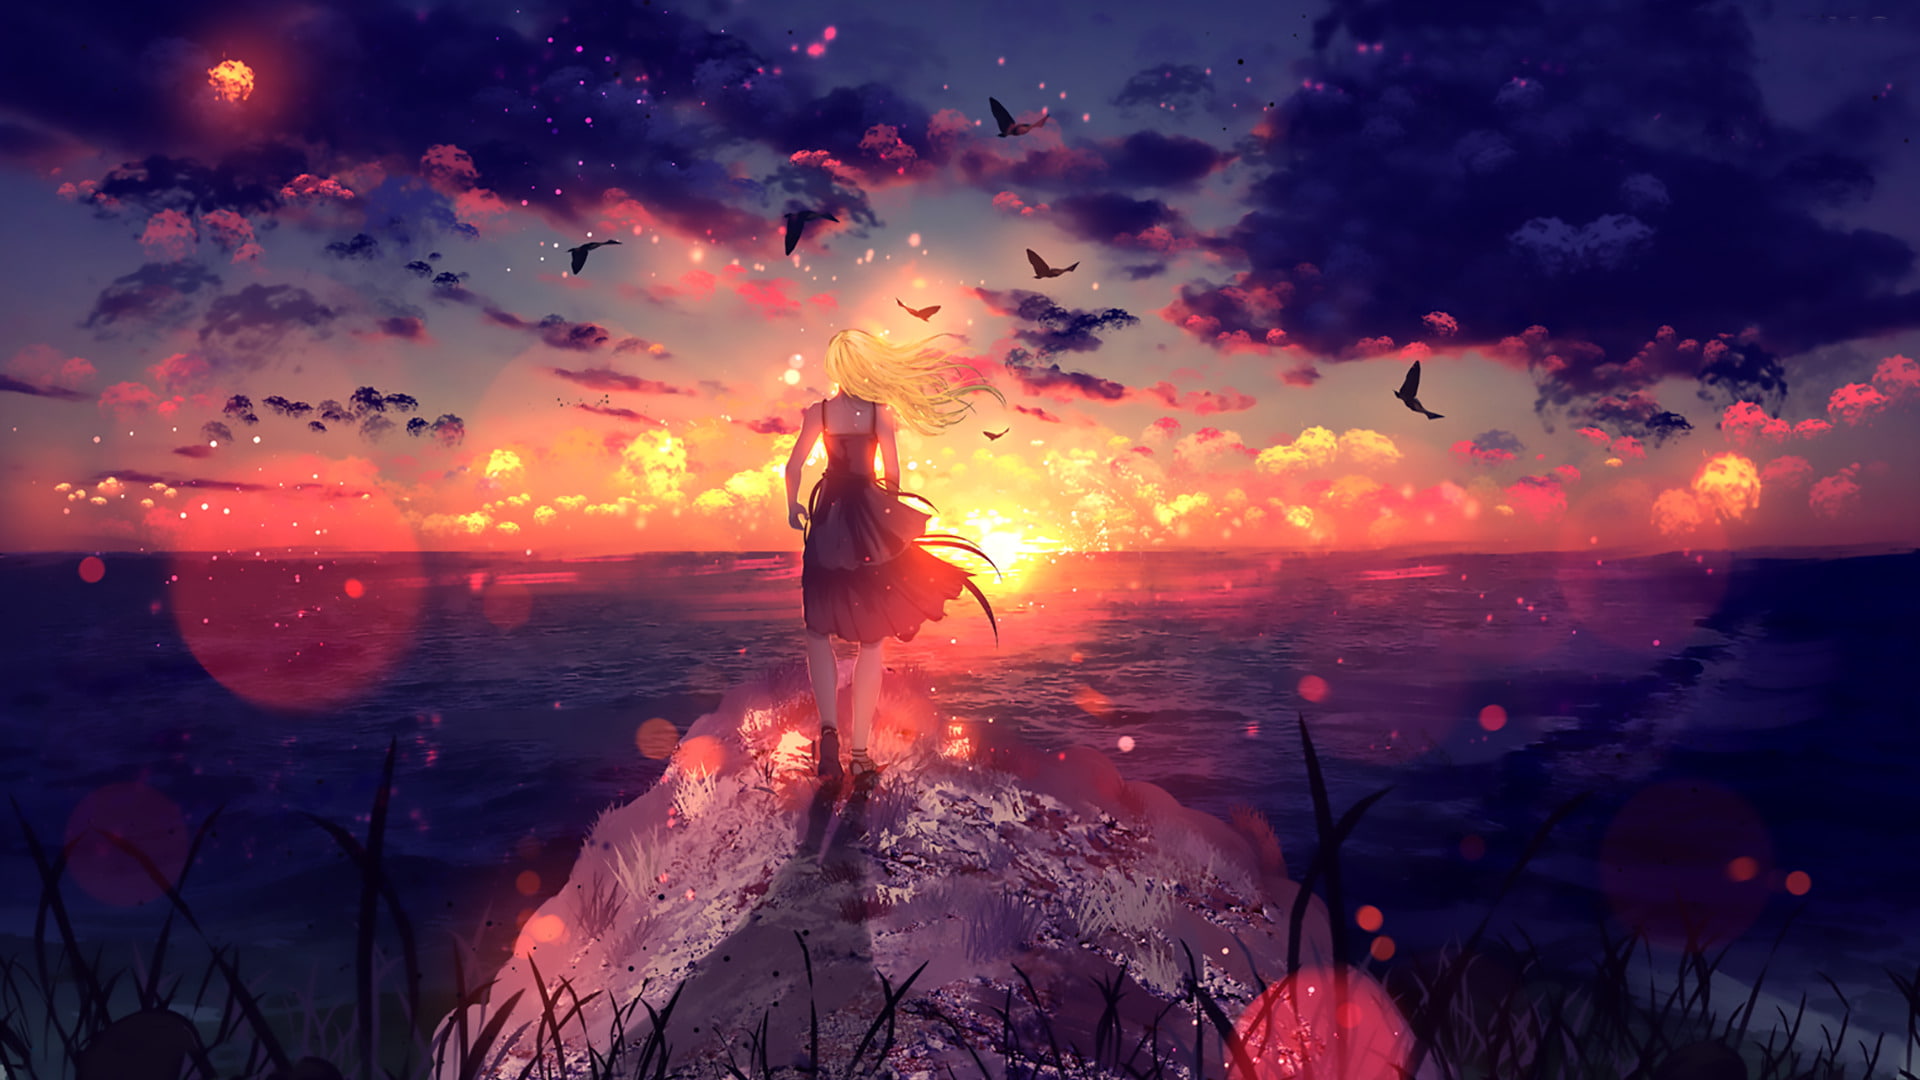 Anime, Original, Bird, Blonde, Cloud, Girl, Sky, Sunset, one person